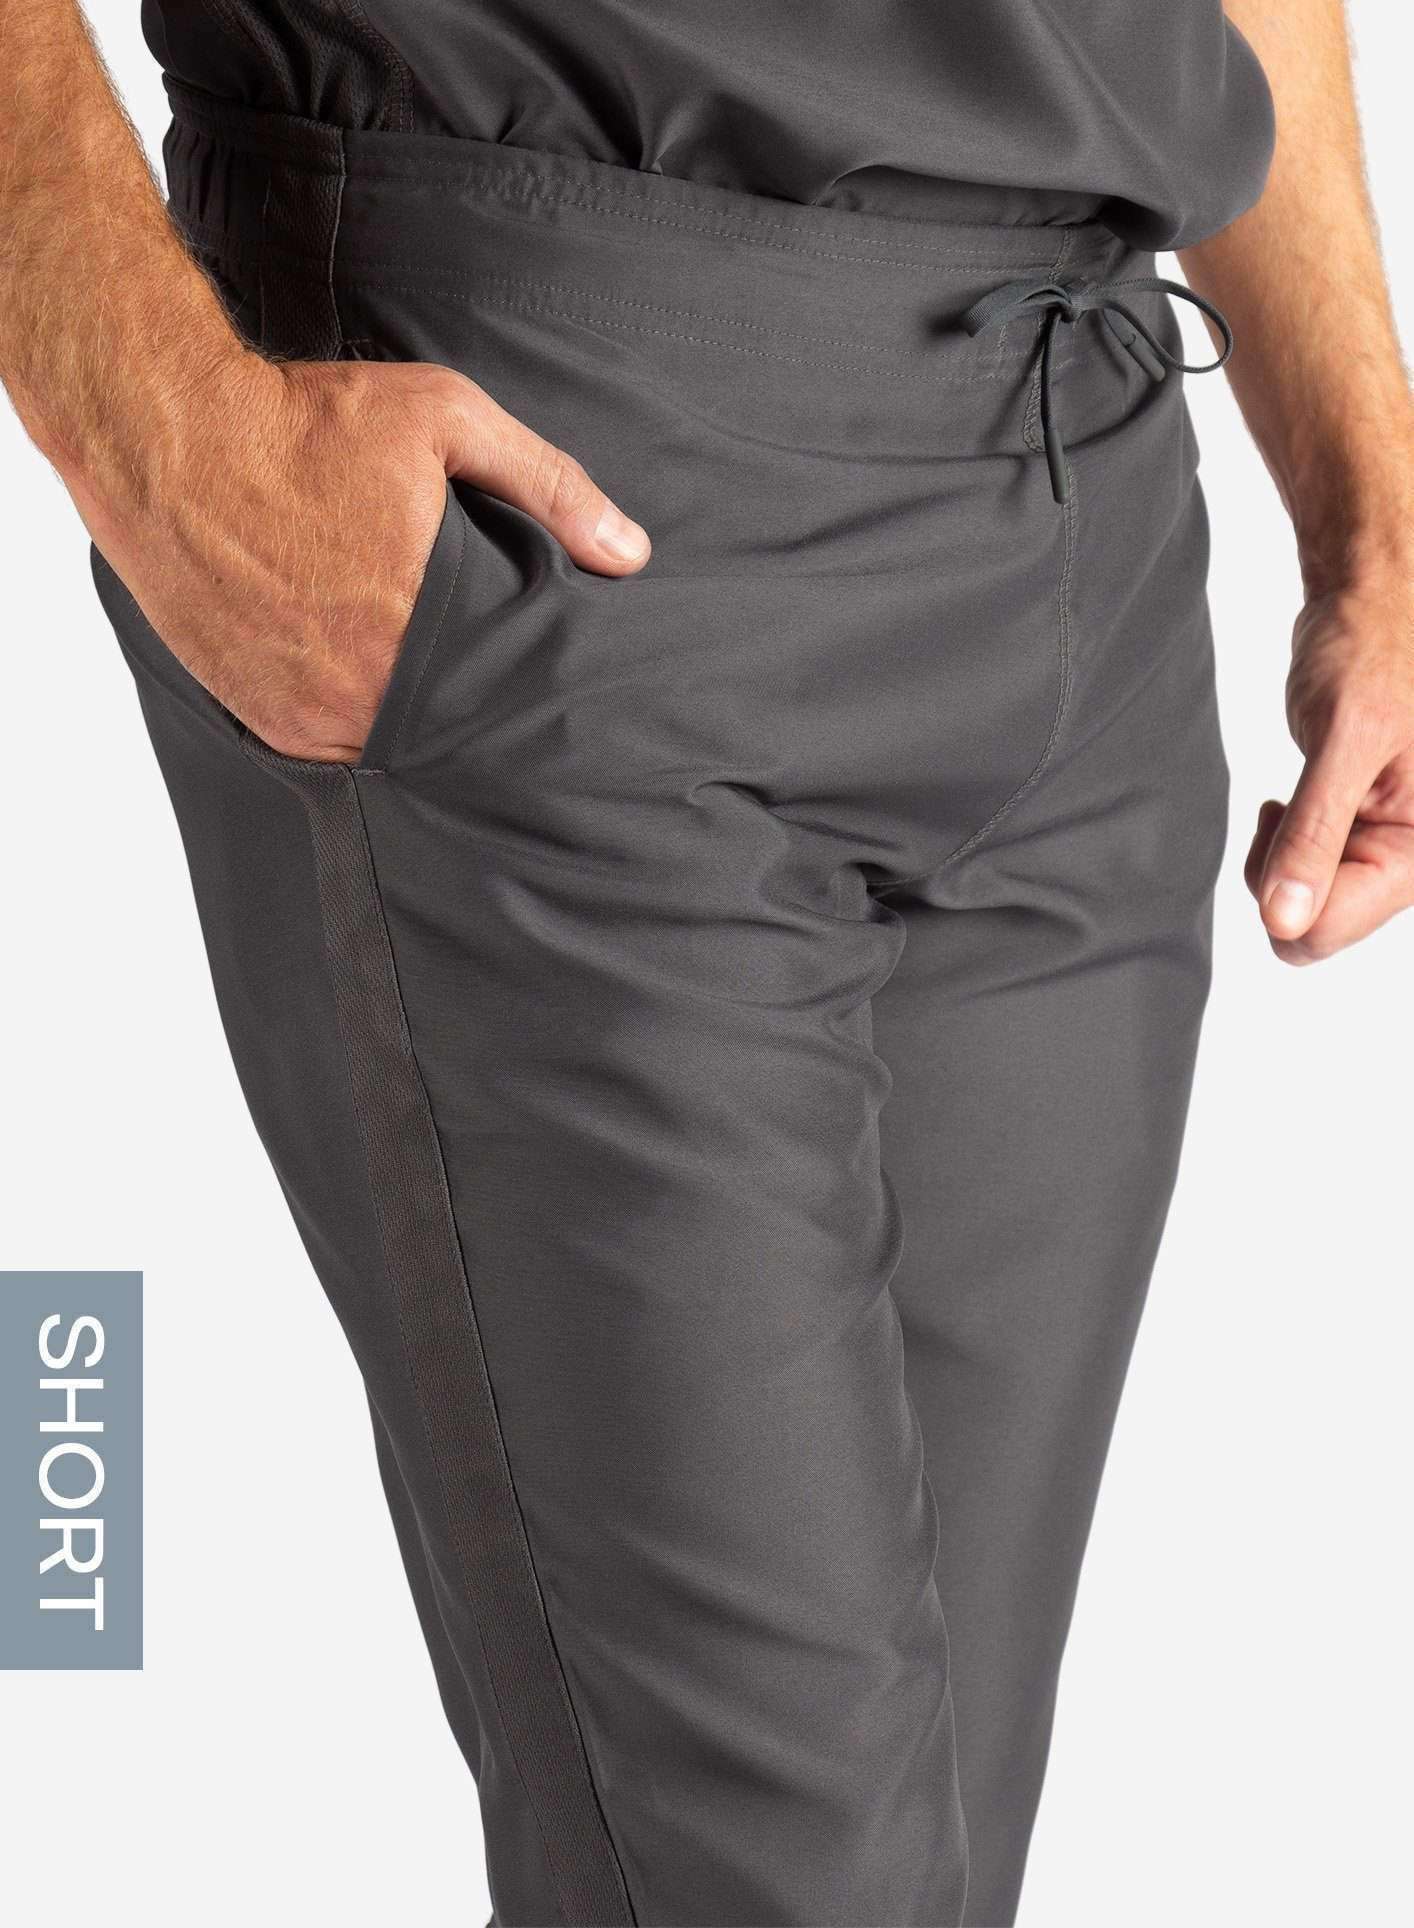 Men&#39;s Short Slim Fit Scrub Pants in Dark gray Waistband View